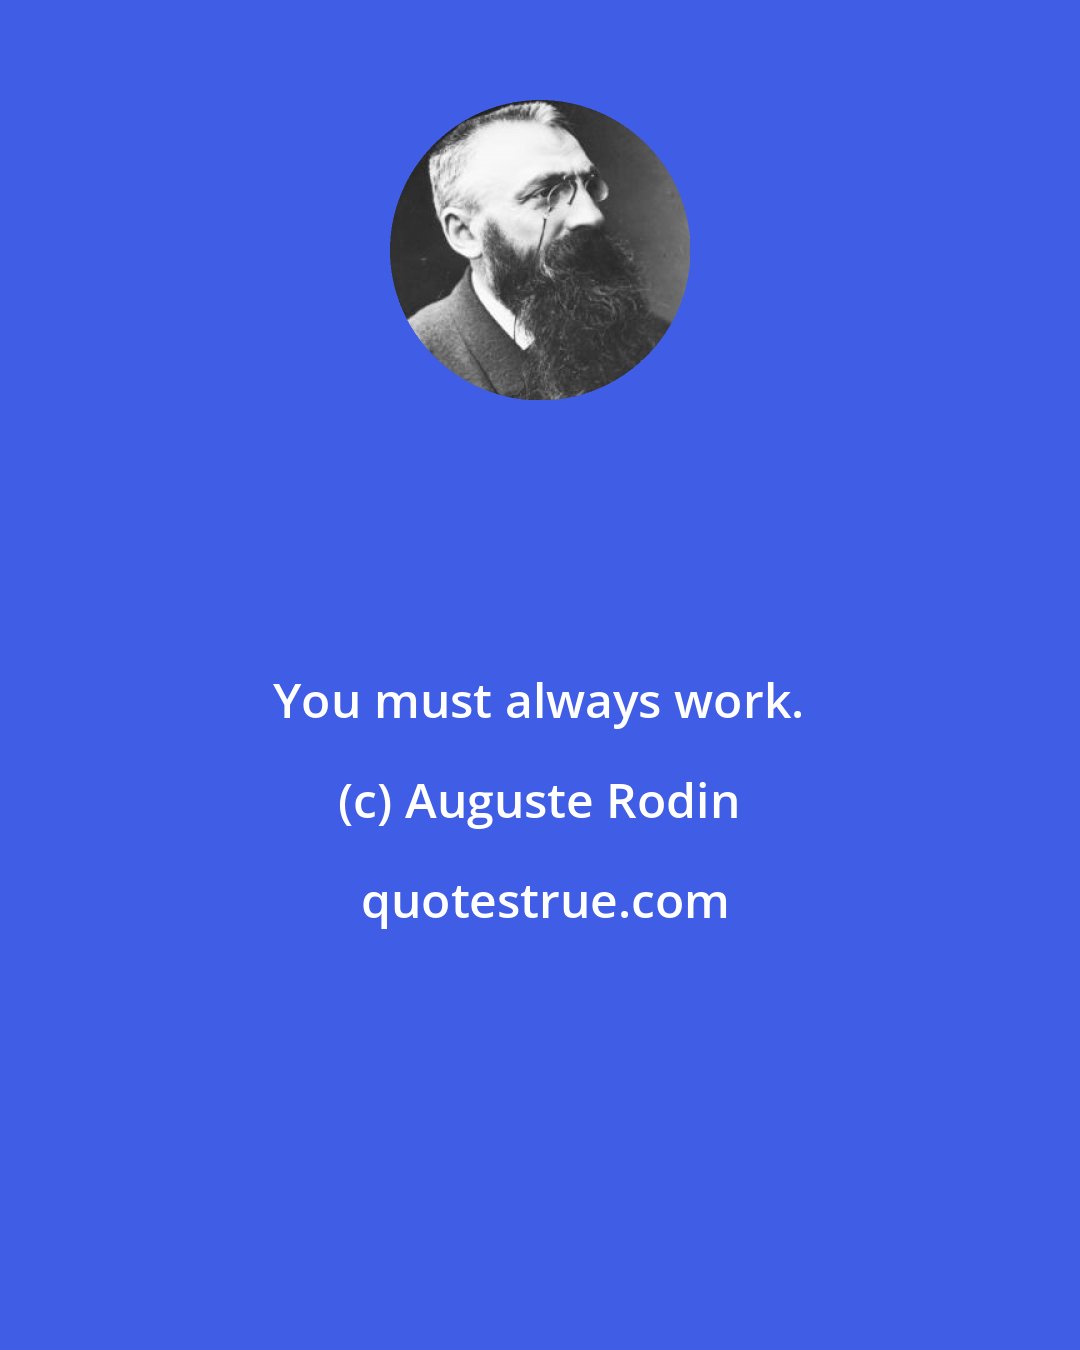 Auguste Rodin: You must always work.